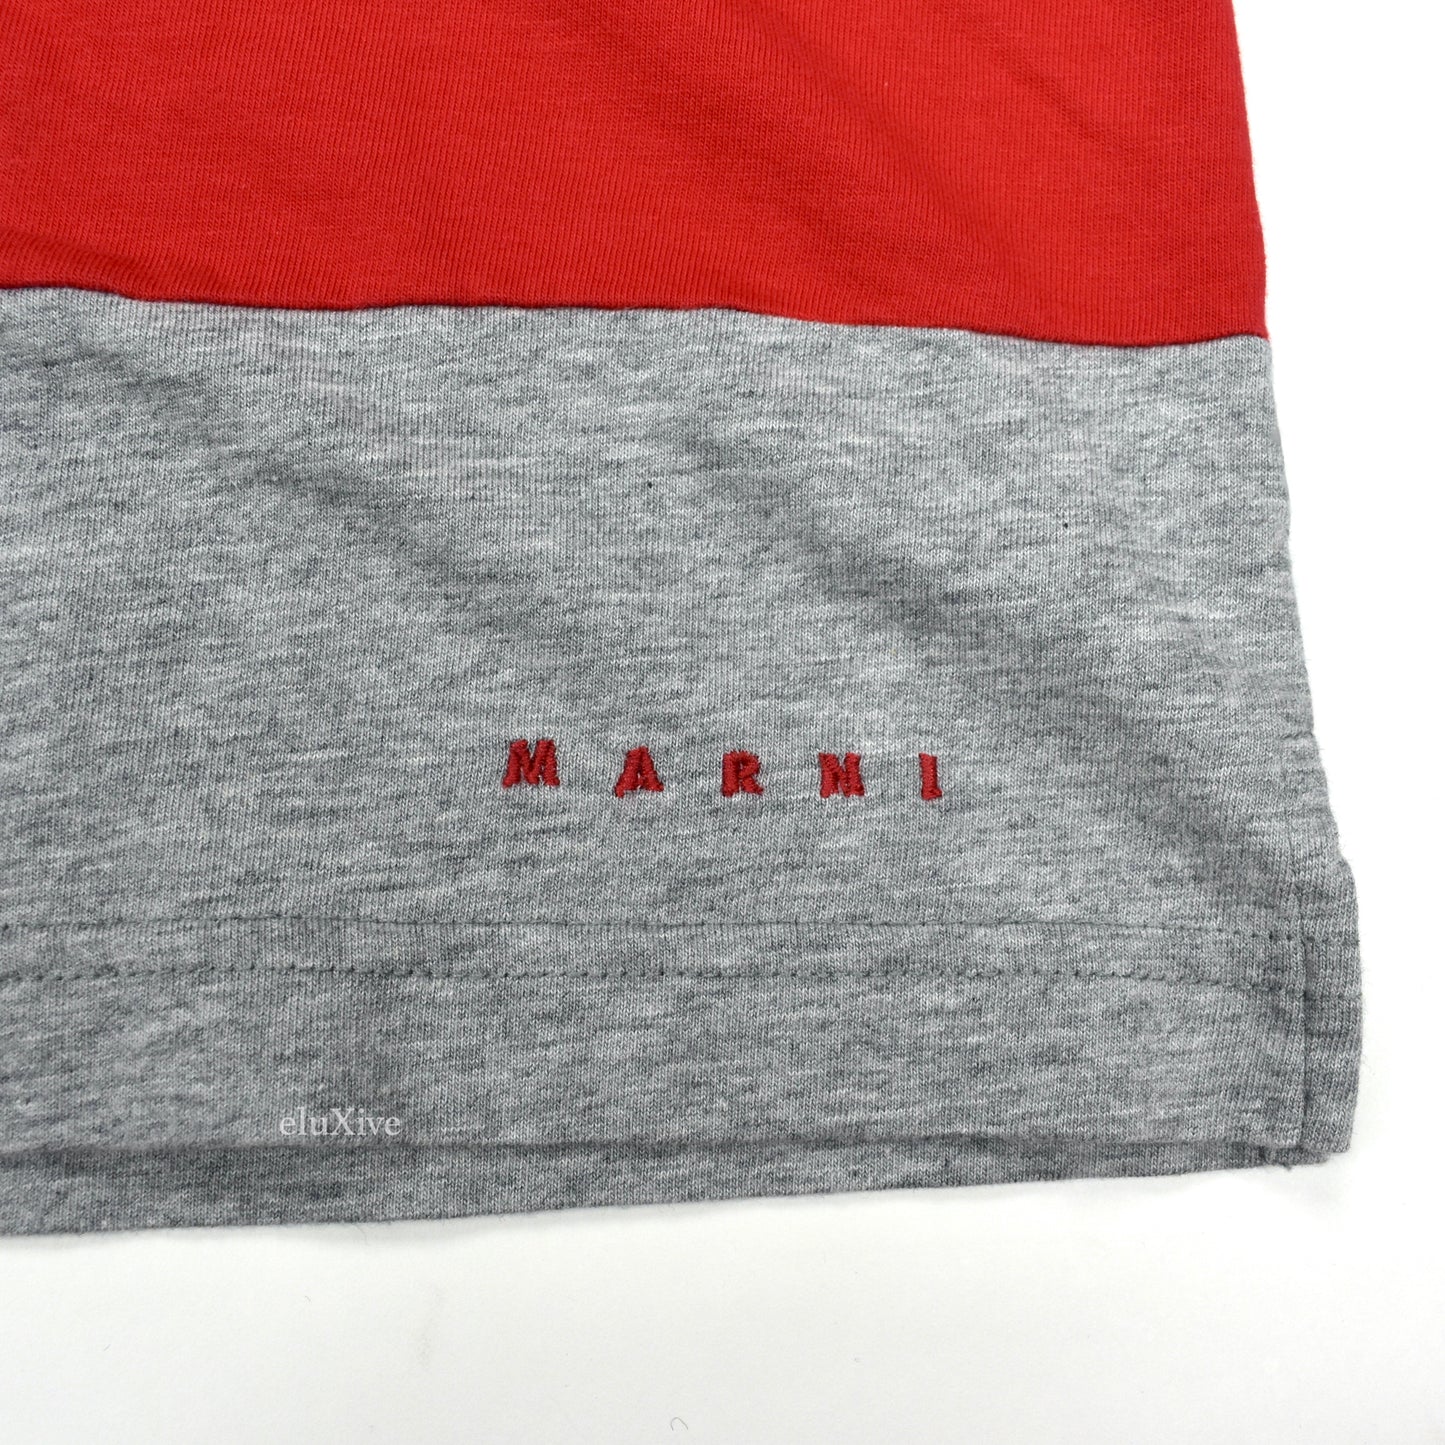 Marni - Red & Gray Panel Striped Polo Shirt